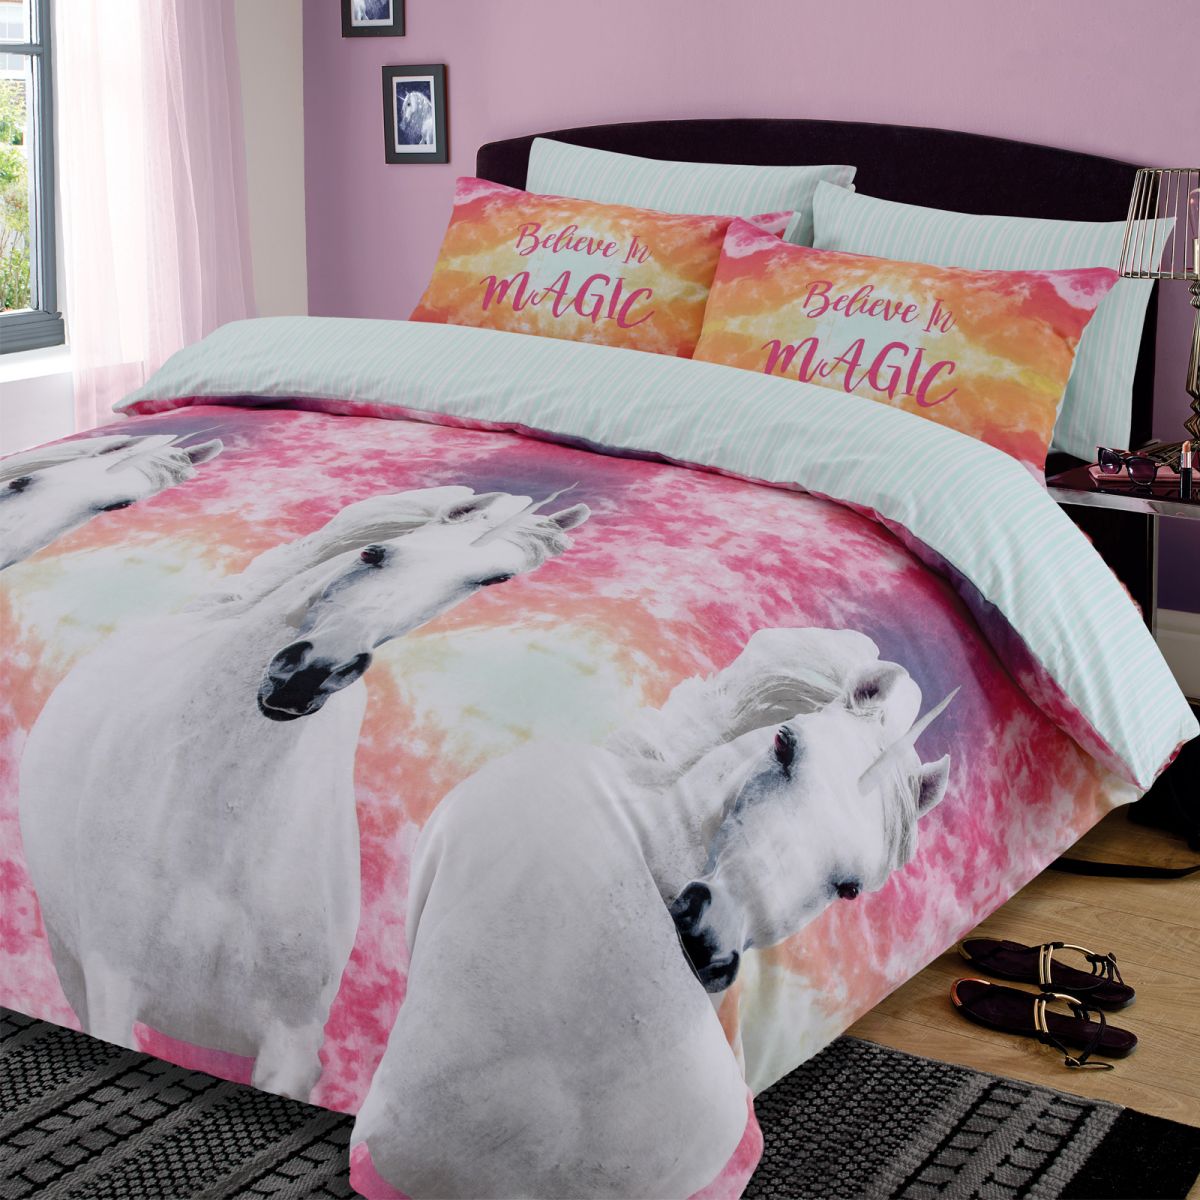 Dreamscene Unicorn Magic Duvet Cover with Pillowcase Reversible Kids Stripe Bedding Set, Pink Blue Grey - King